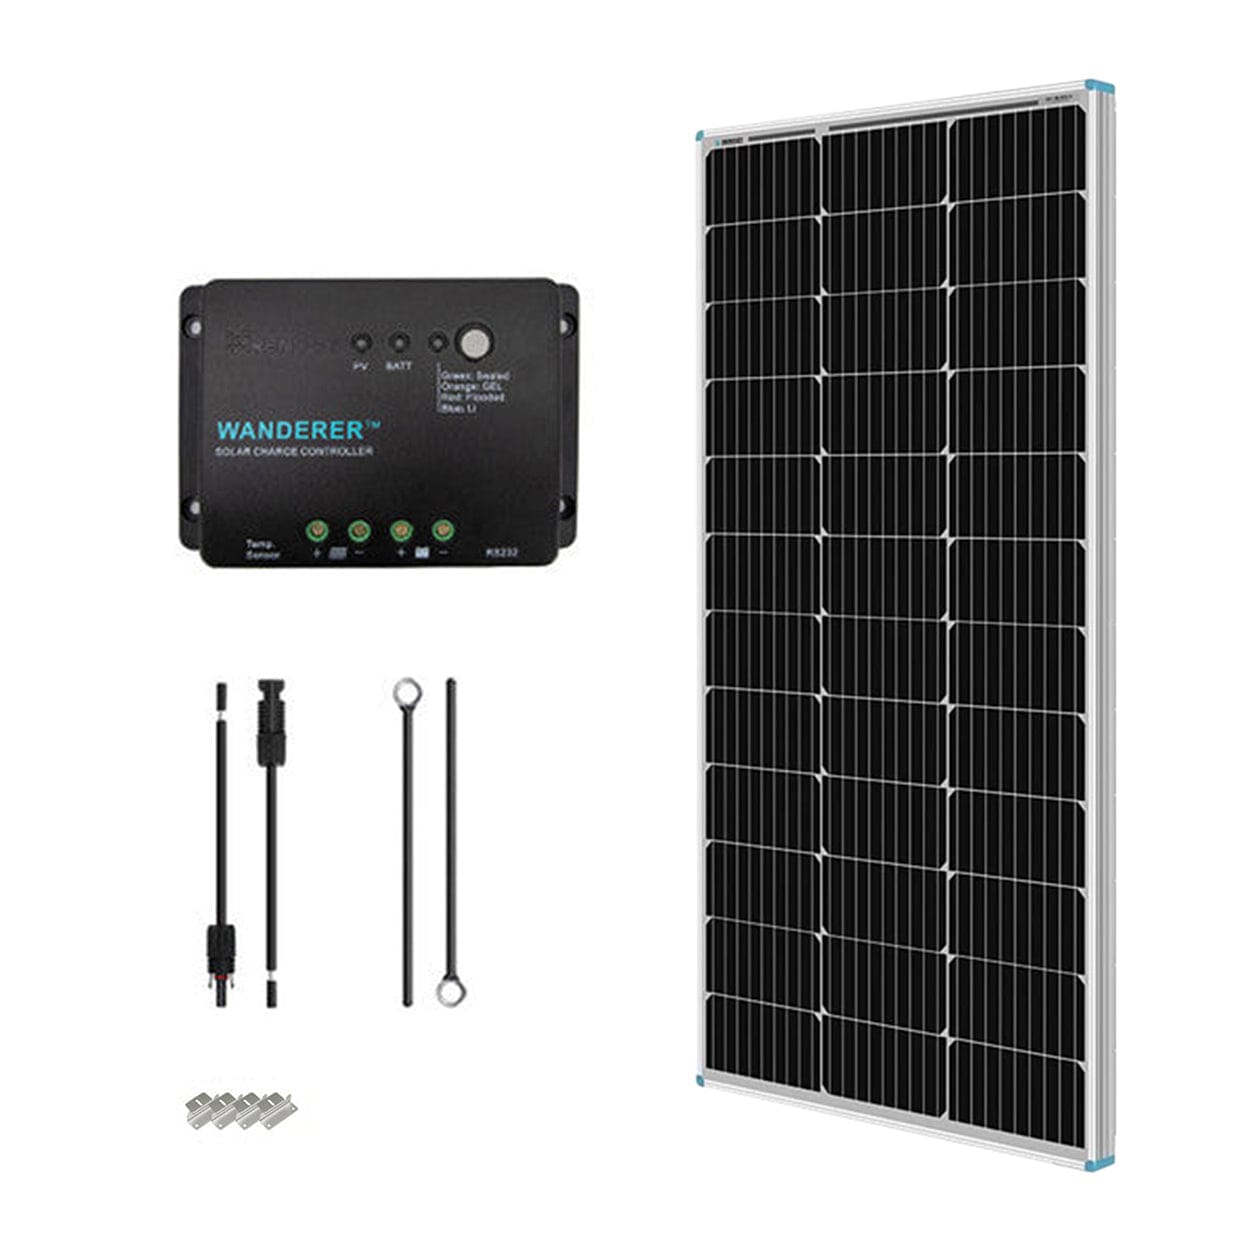 Renogy 100W 12V Monocrystalline Solar Starter Kit w/Wanderer 30A Charge Controller Renogy Solar Power Kits